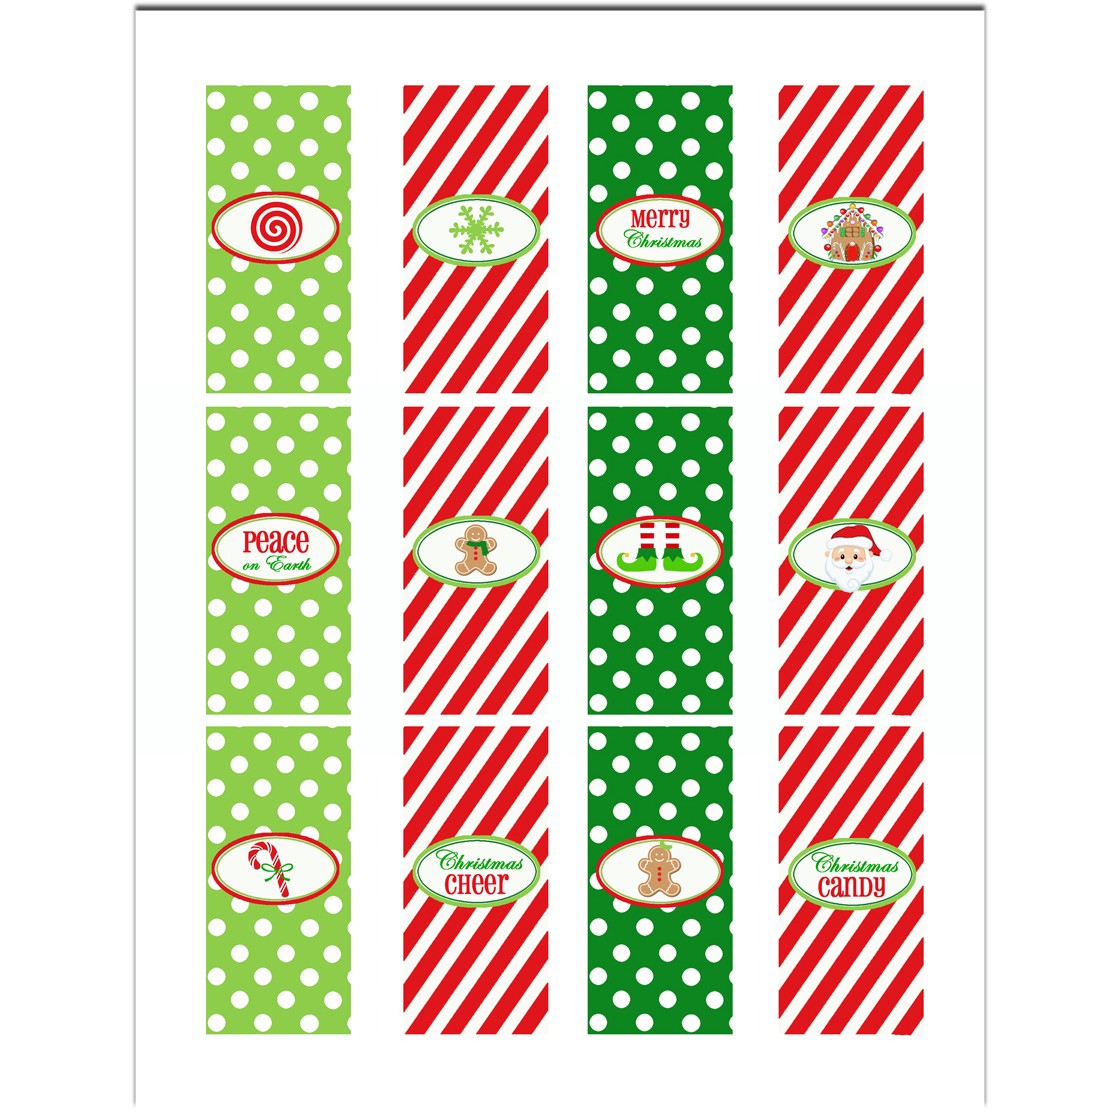 Christmas Candy Bar Wrappers To Print / Free Printable Christmas Candy